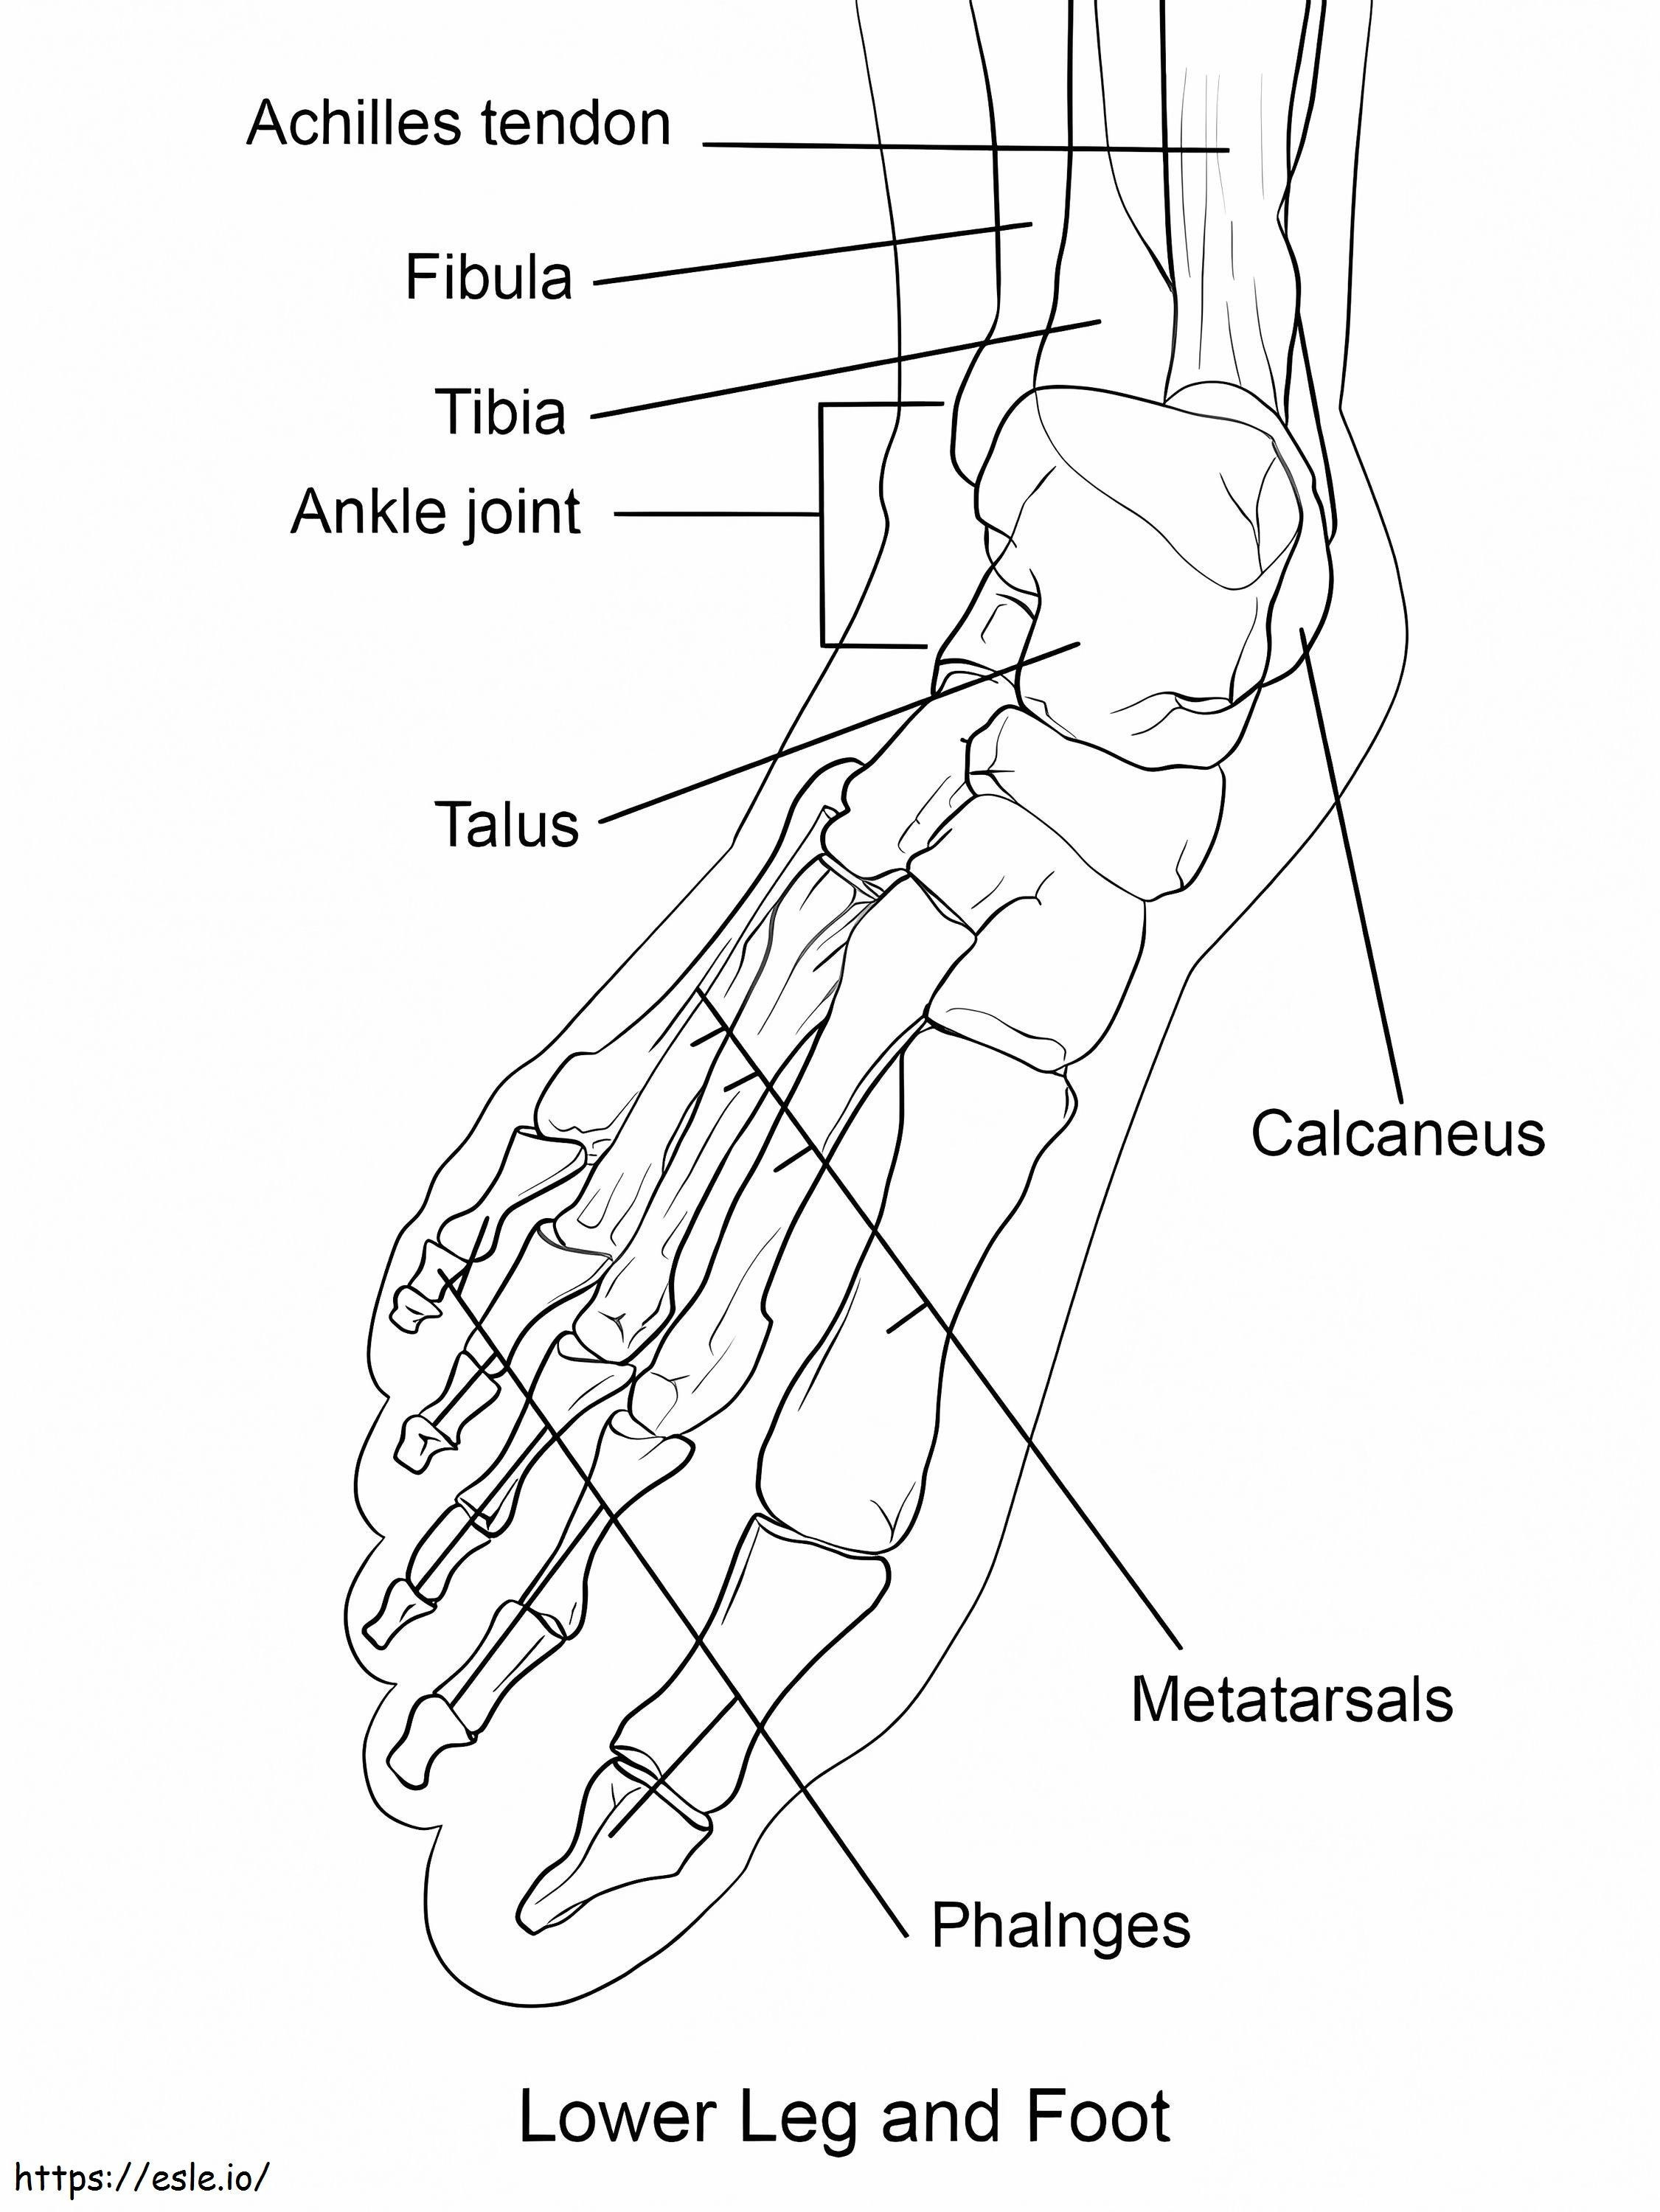 Human Foot Bones coloring page